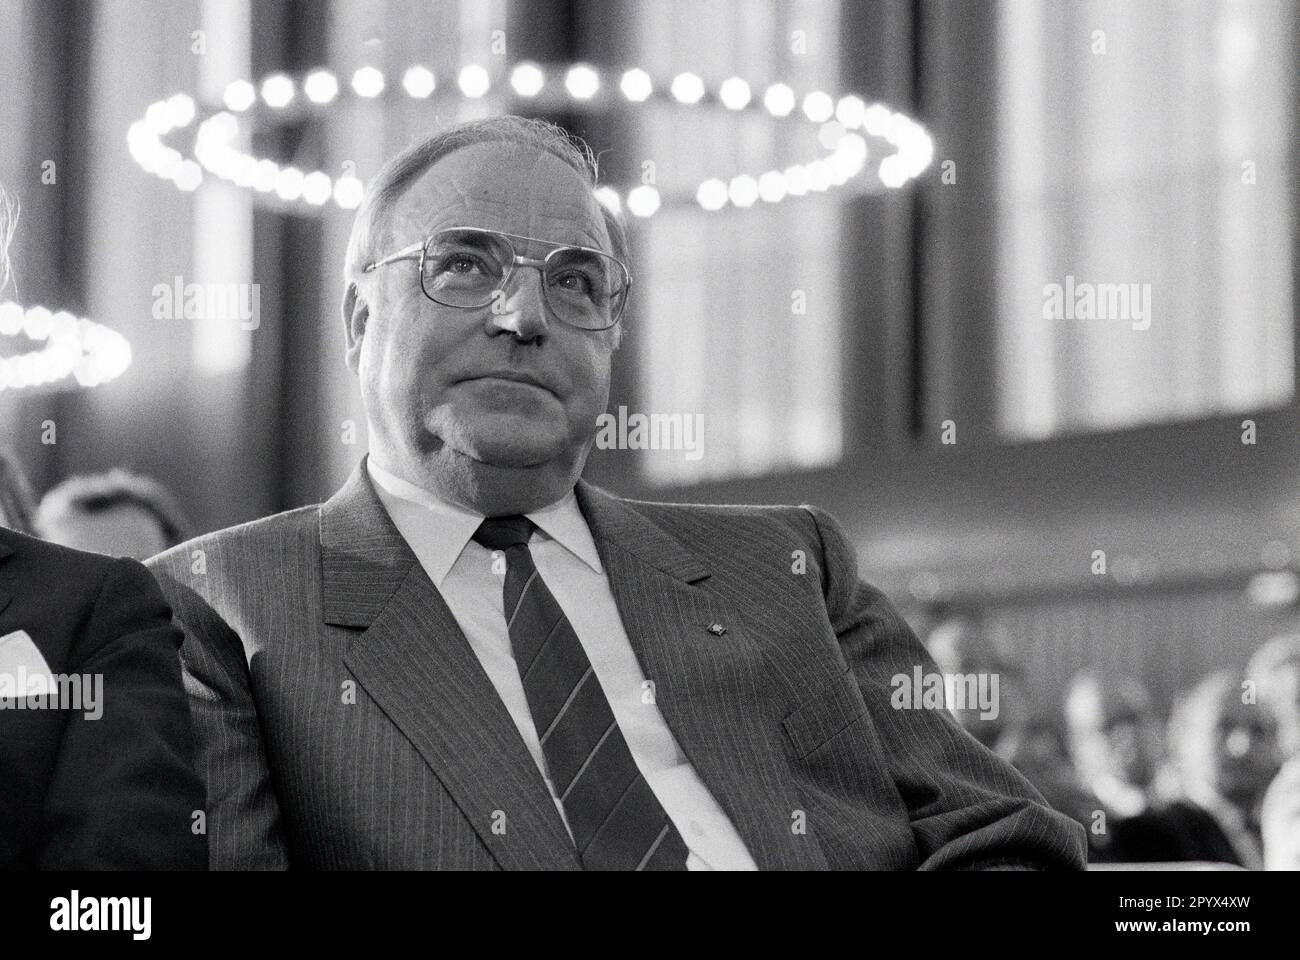 ca. 1991, DEU, Germany, Bonn, Dr. Helmut Kohl, Chancellor of the Federal Republic of Germany at Bonn Stock Photo